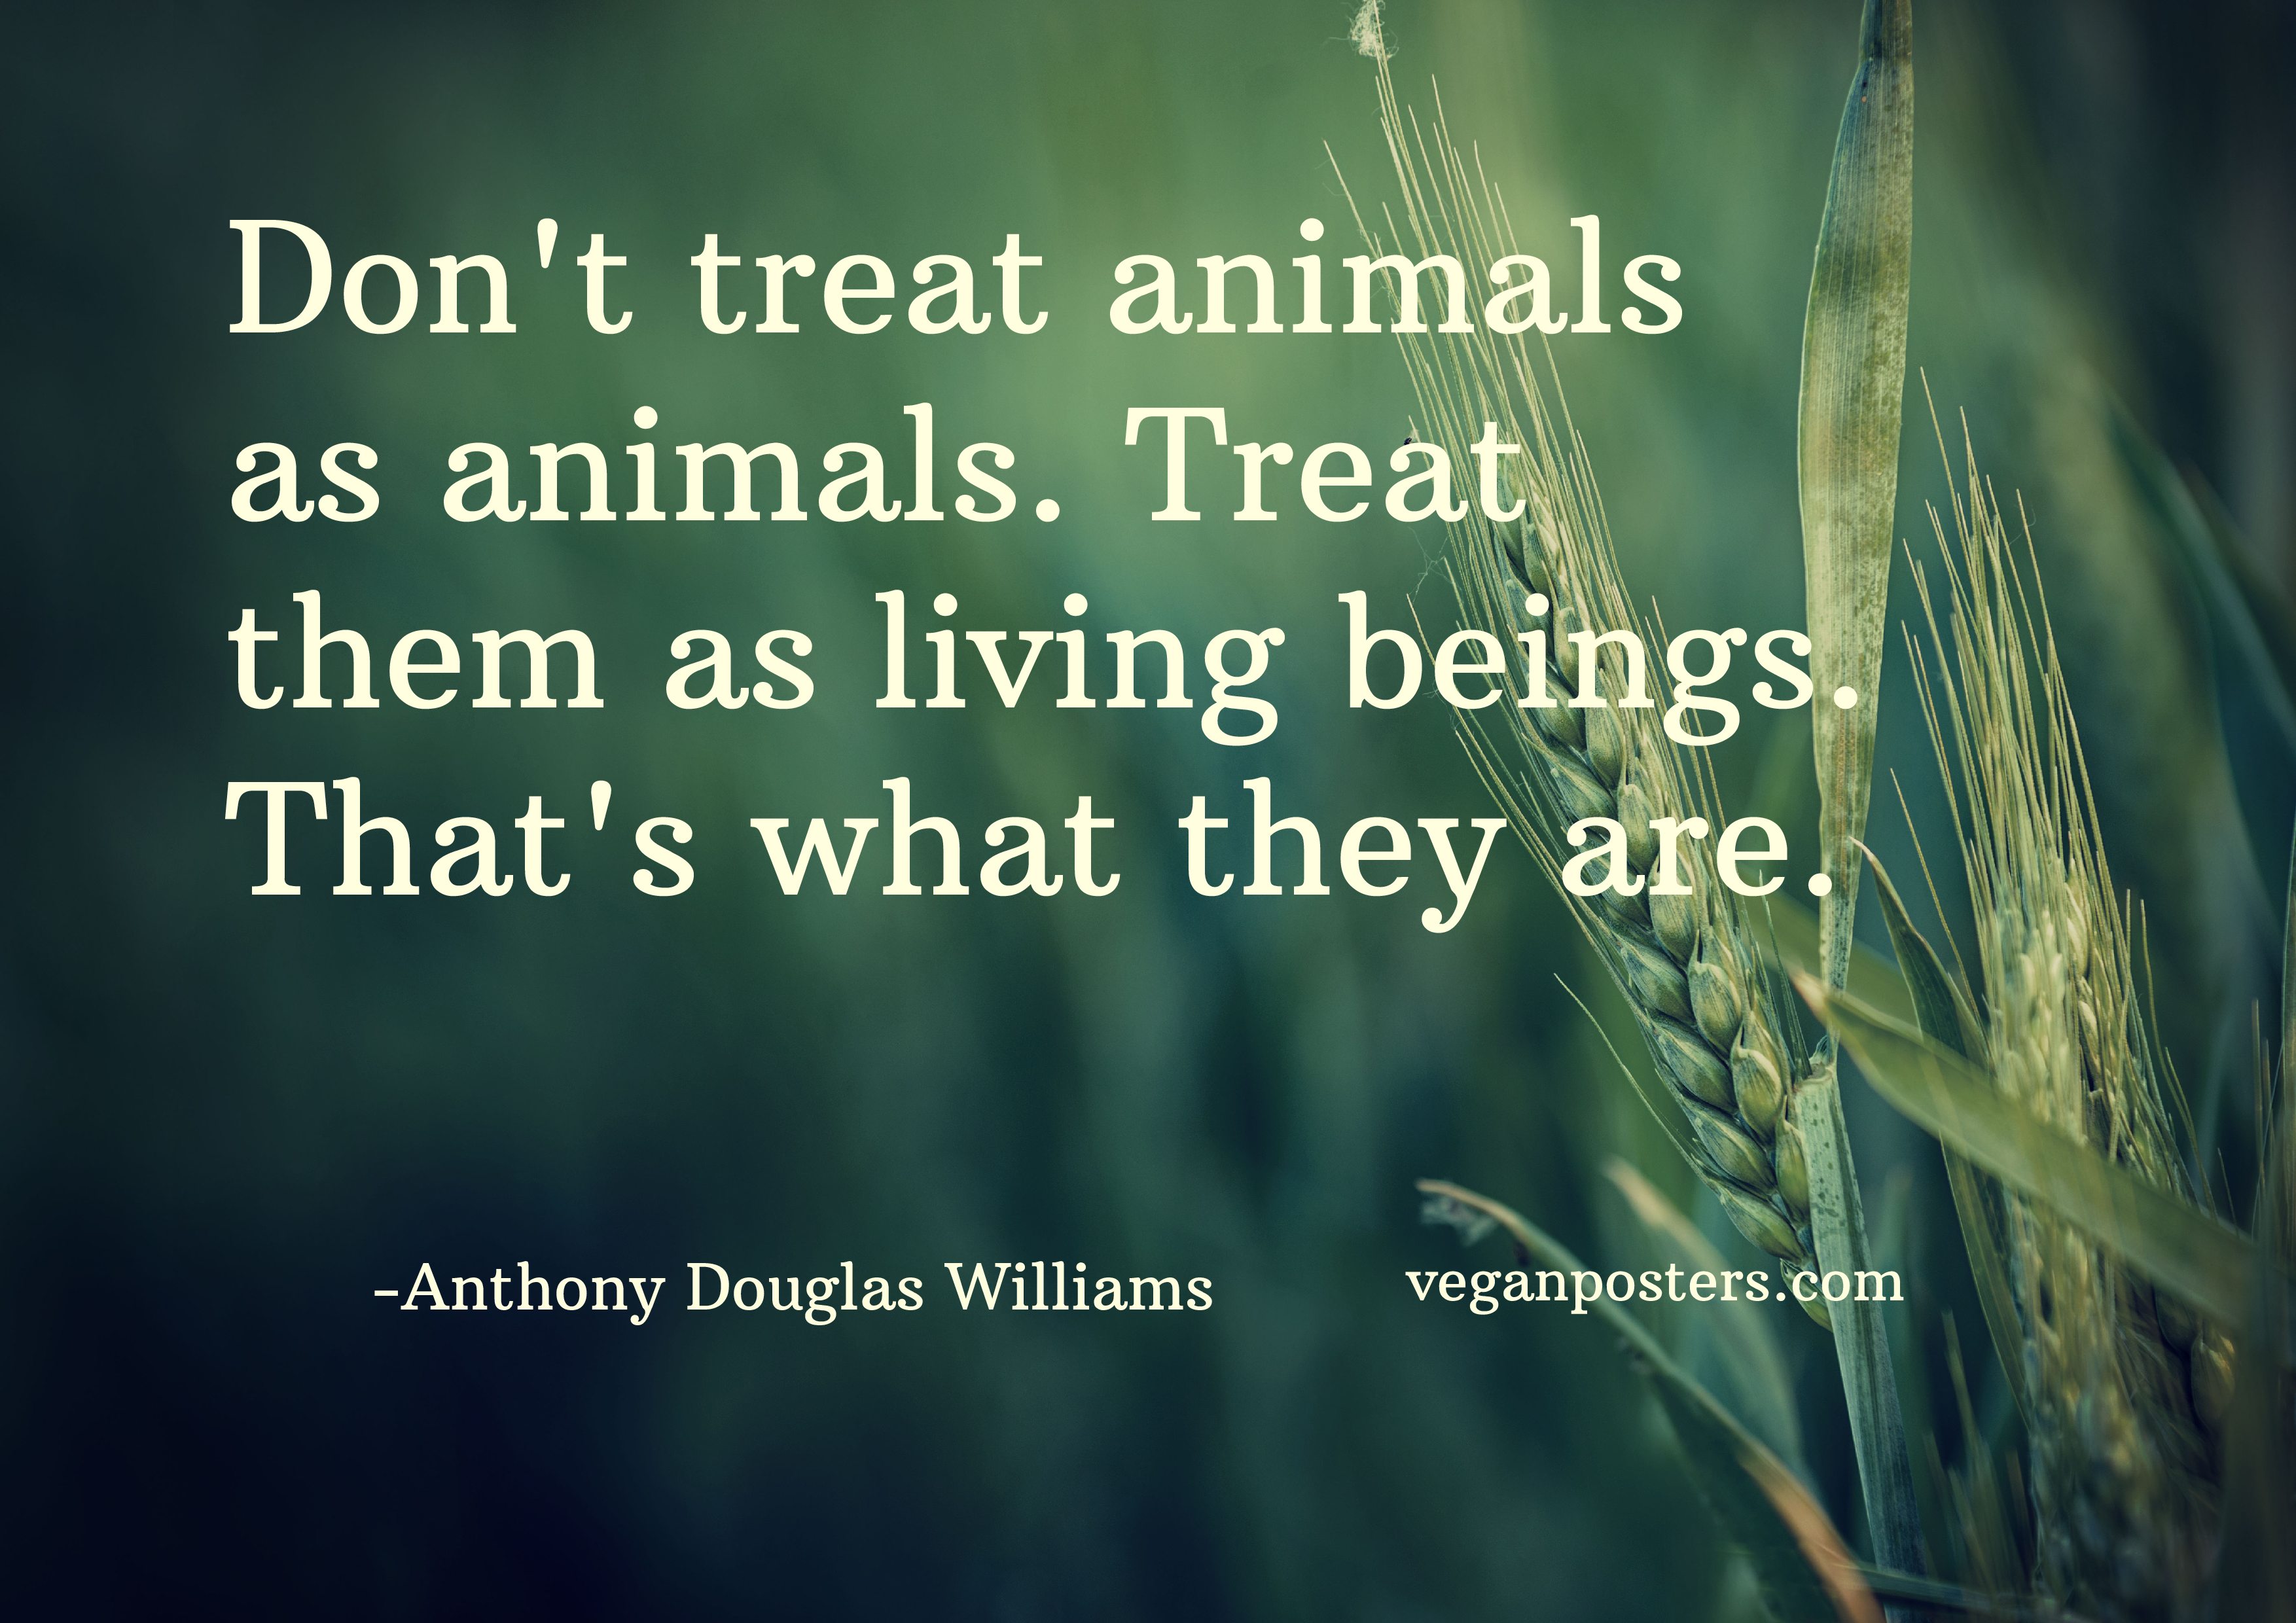 Don't treat animals as animals | Vegan Posters